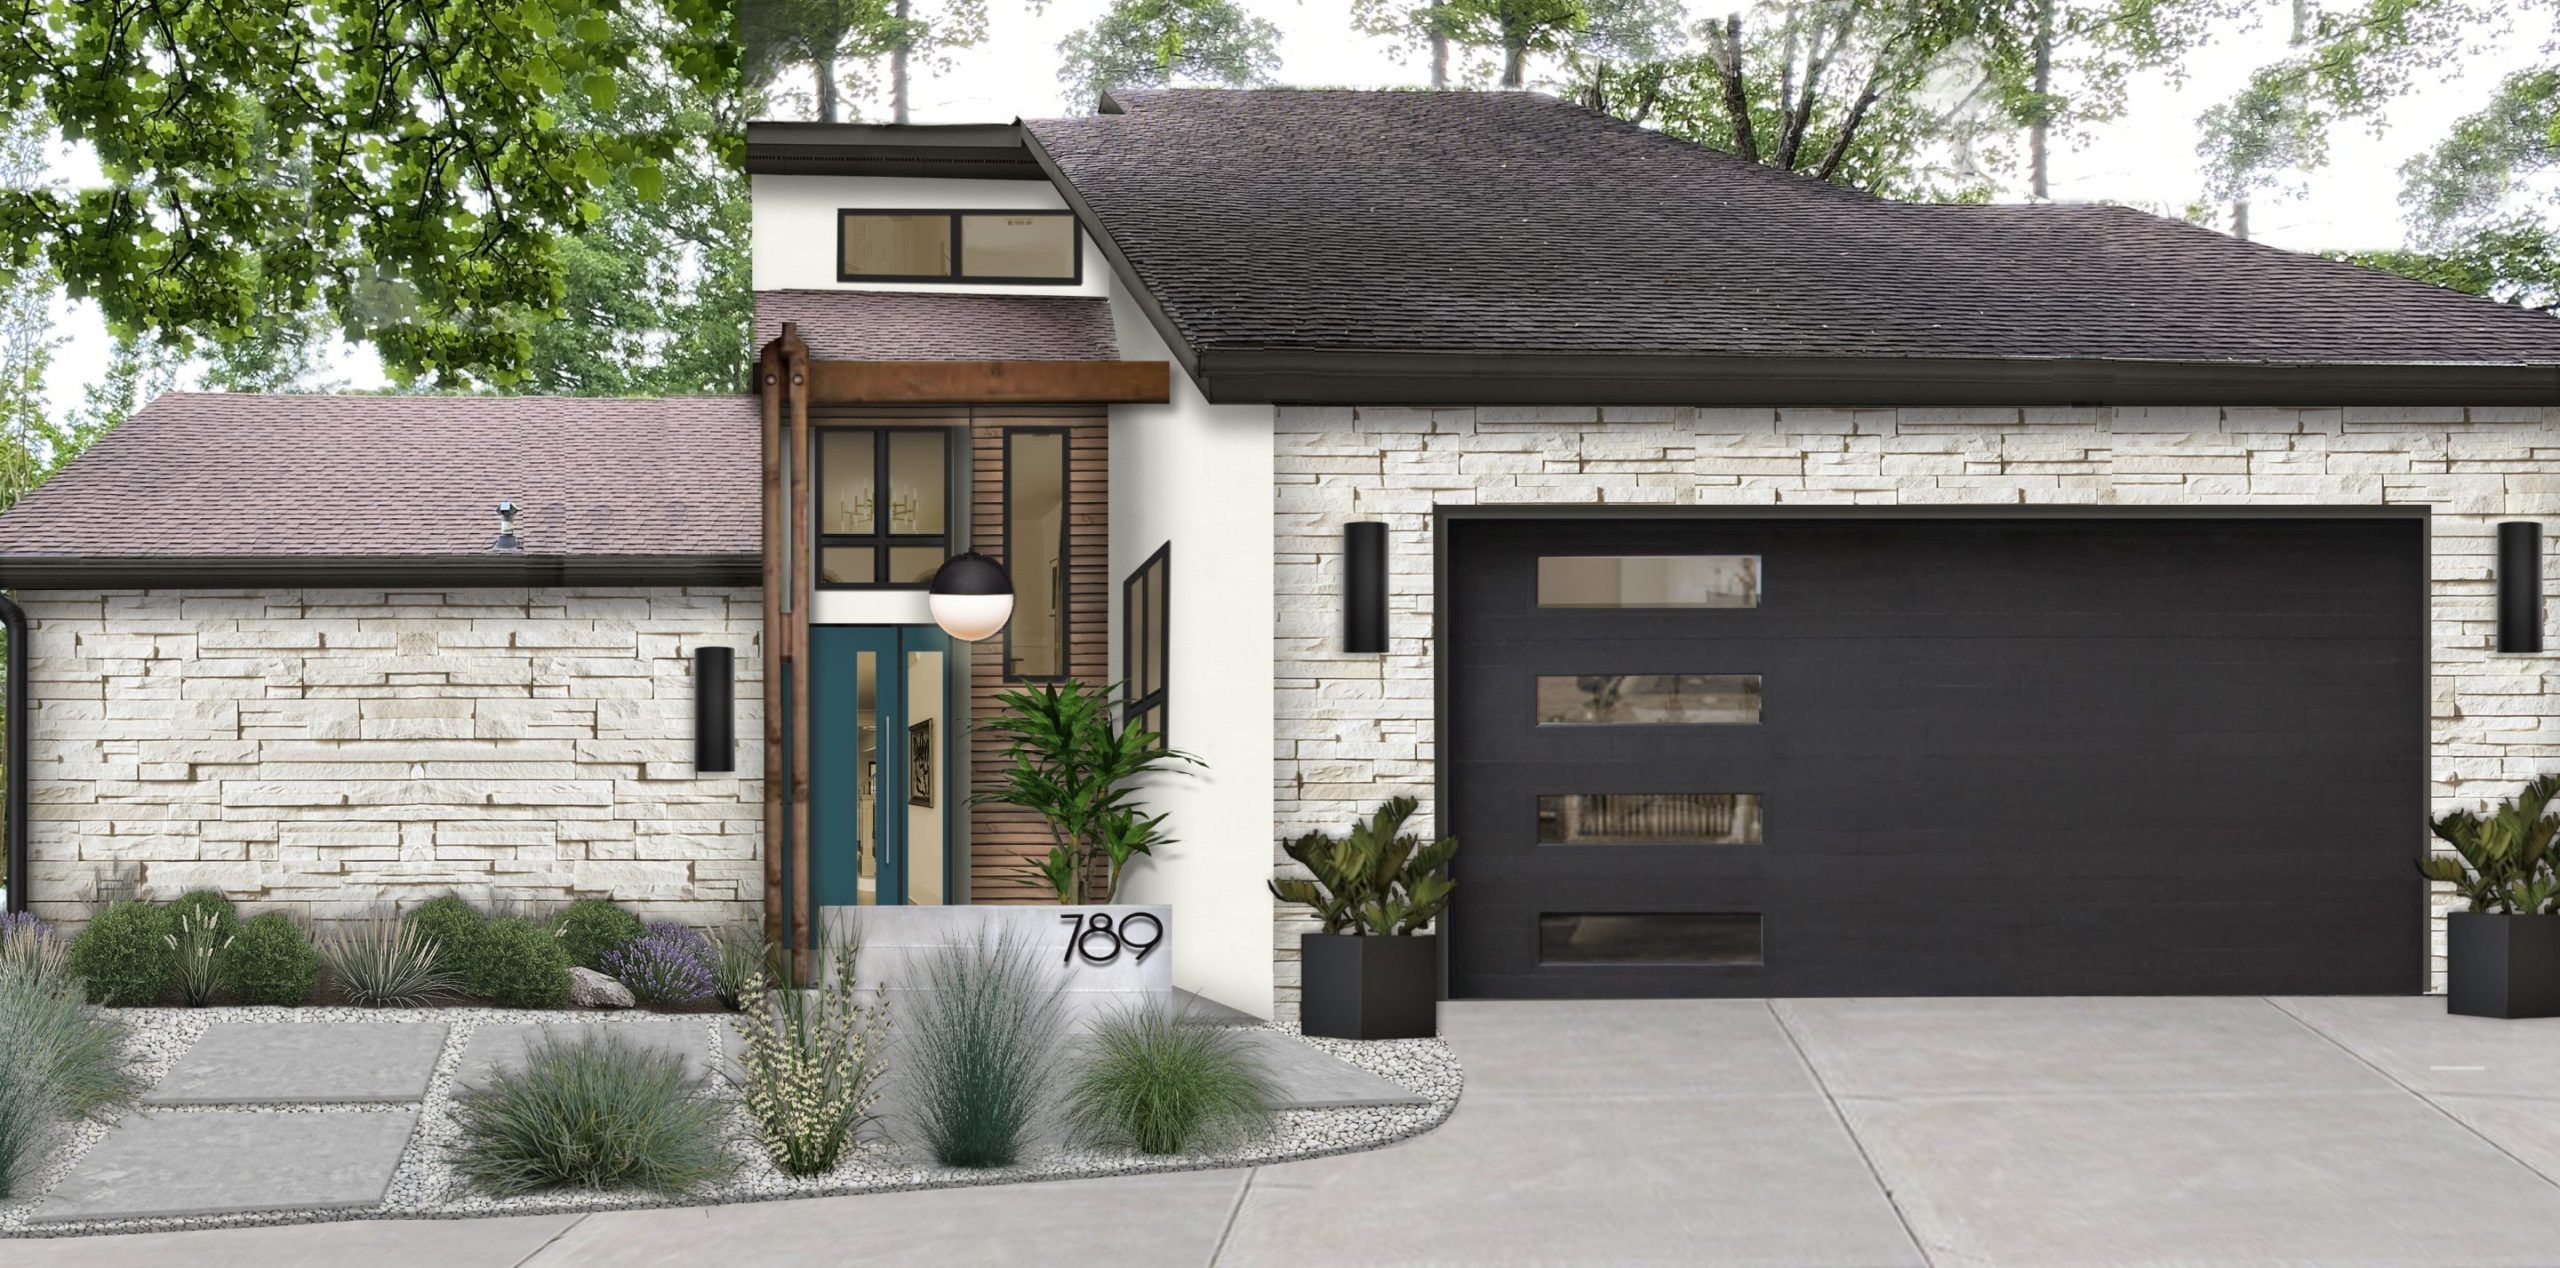 simple house design ideas exterior